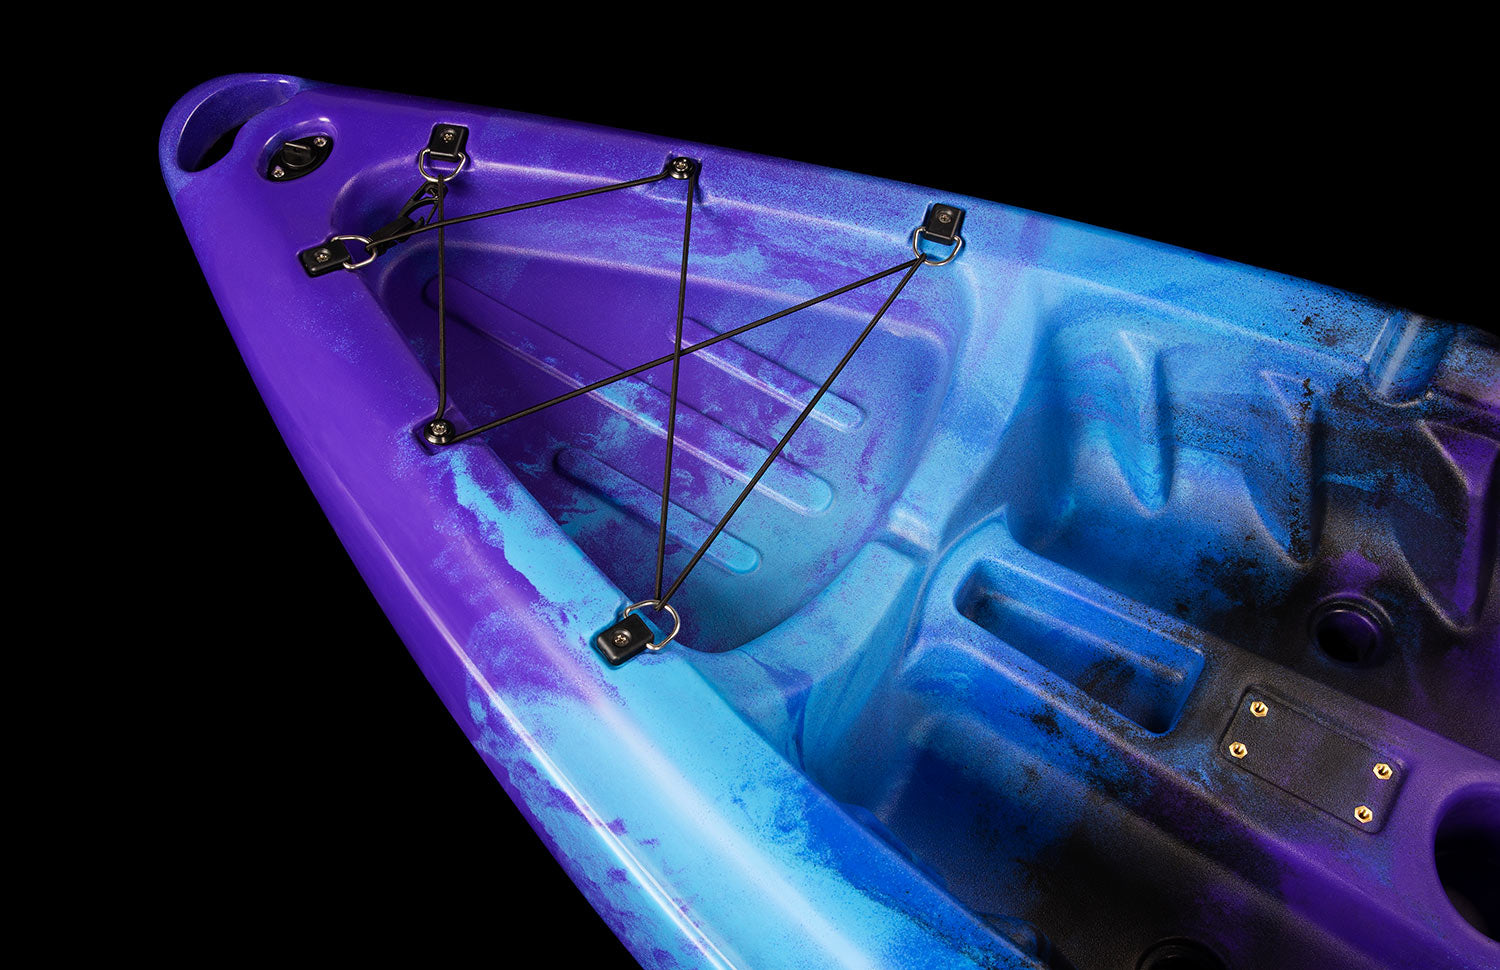 Vibe kayaks Skipjack 90 bow storage area with bungee net